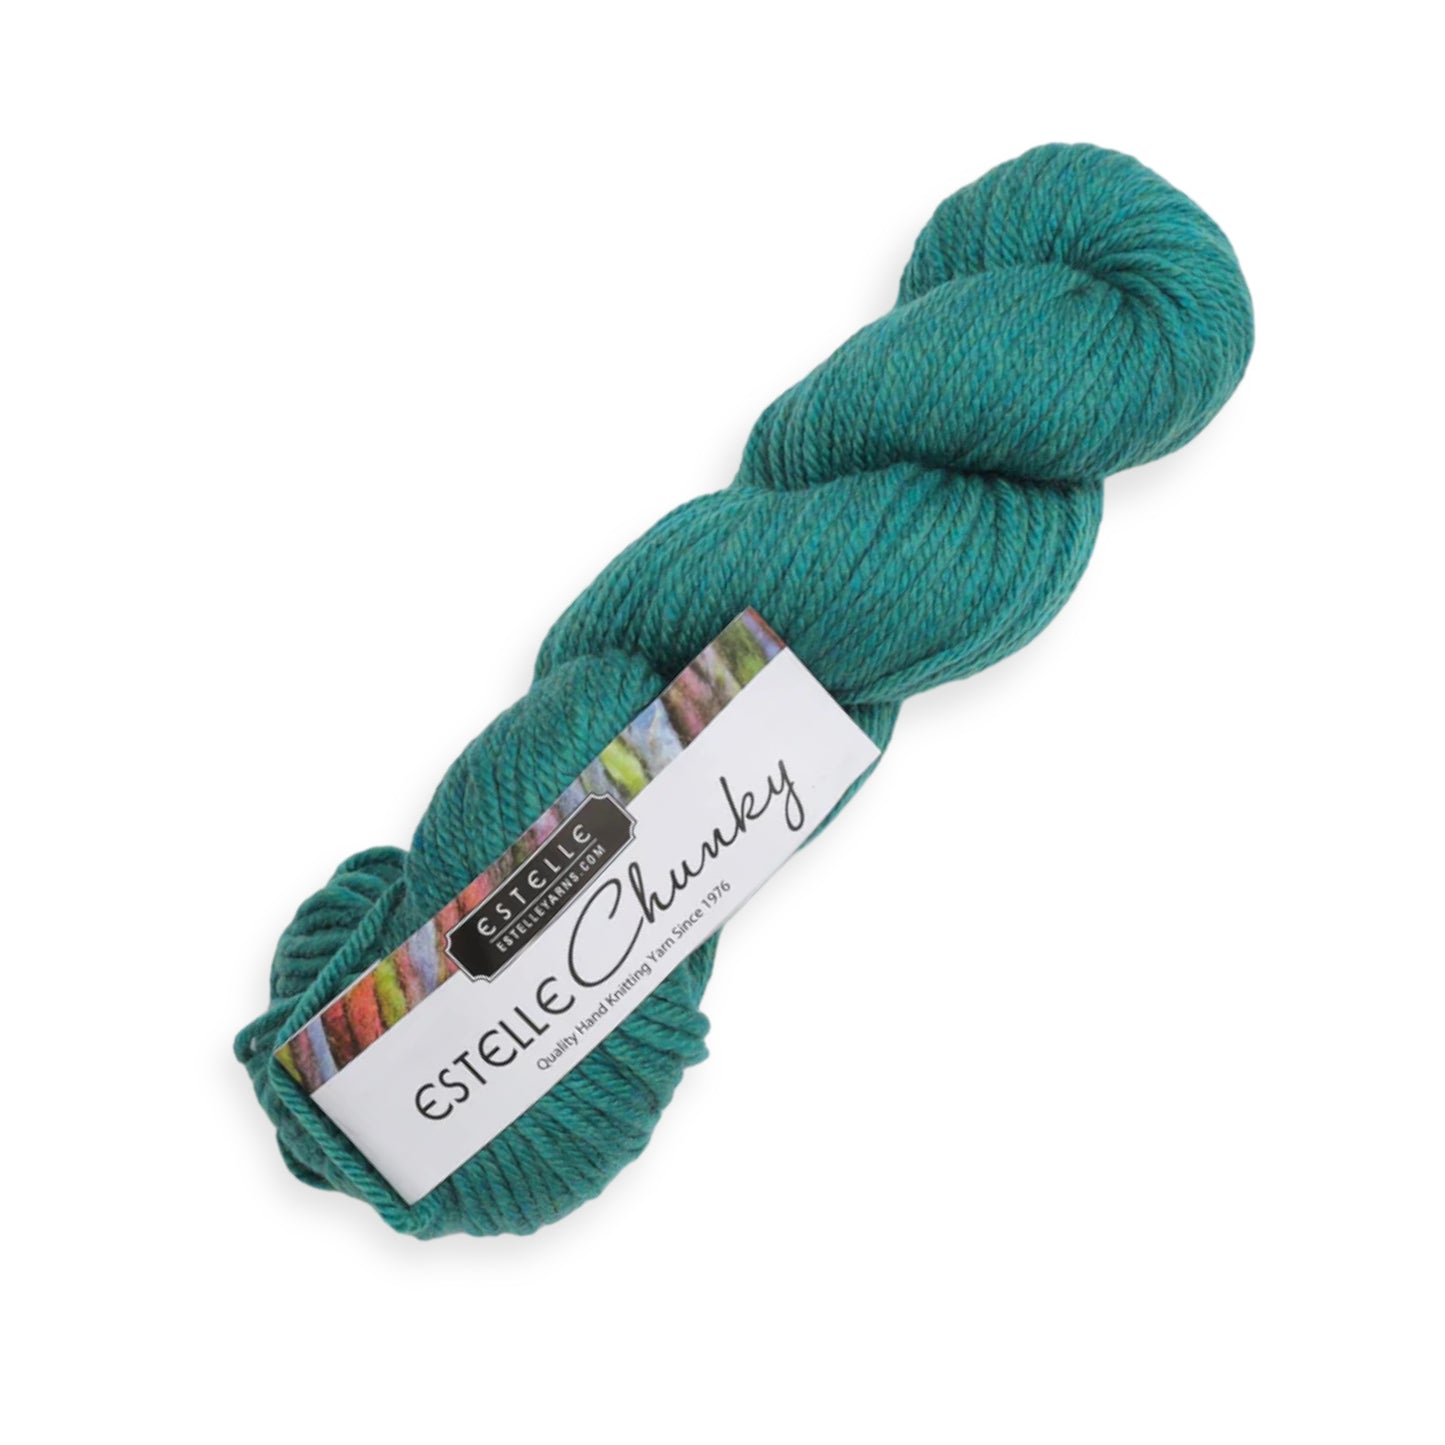 Giant handspun multicolored yarn, XL super bulky chunky yarn